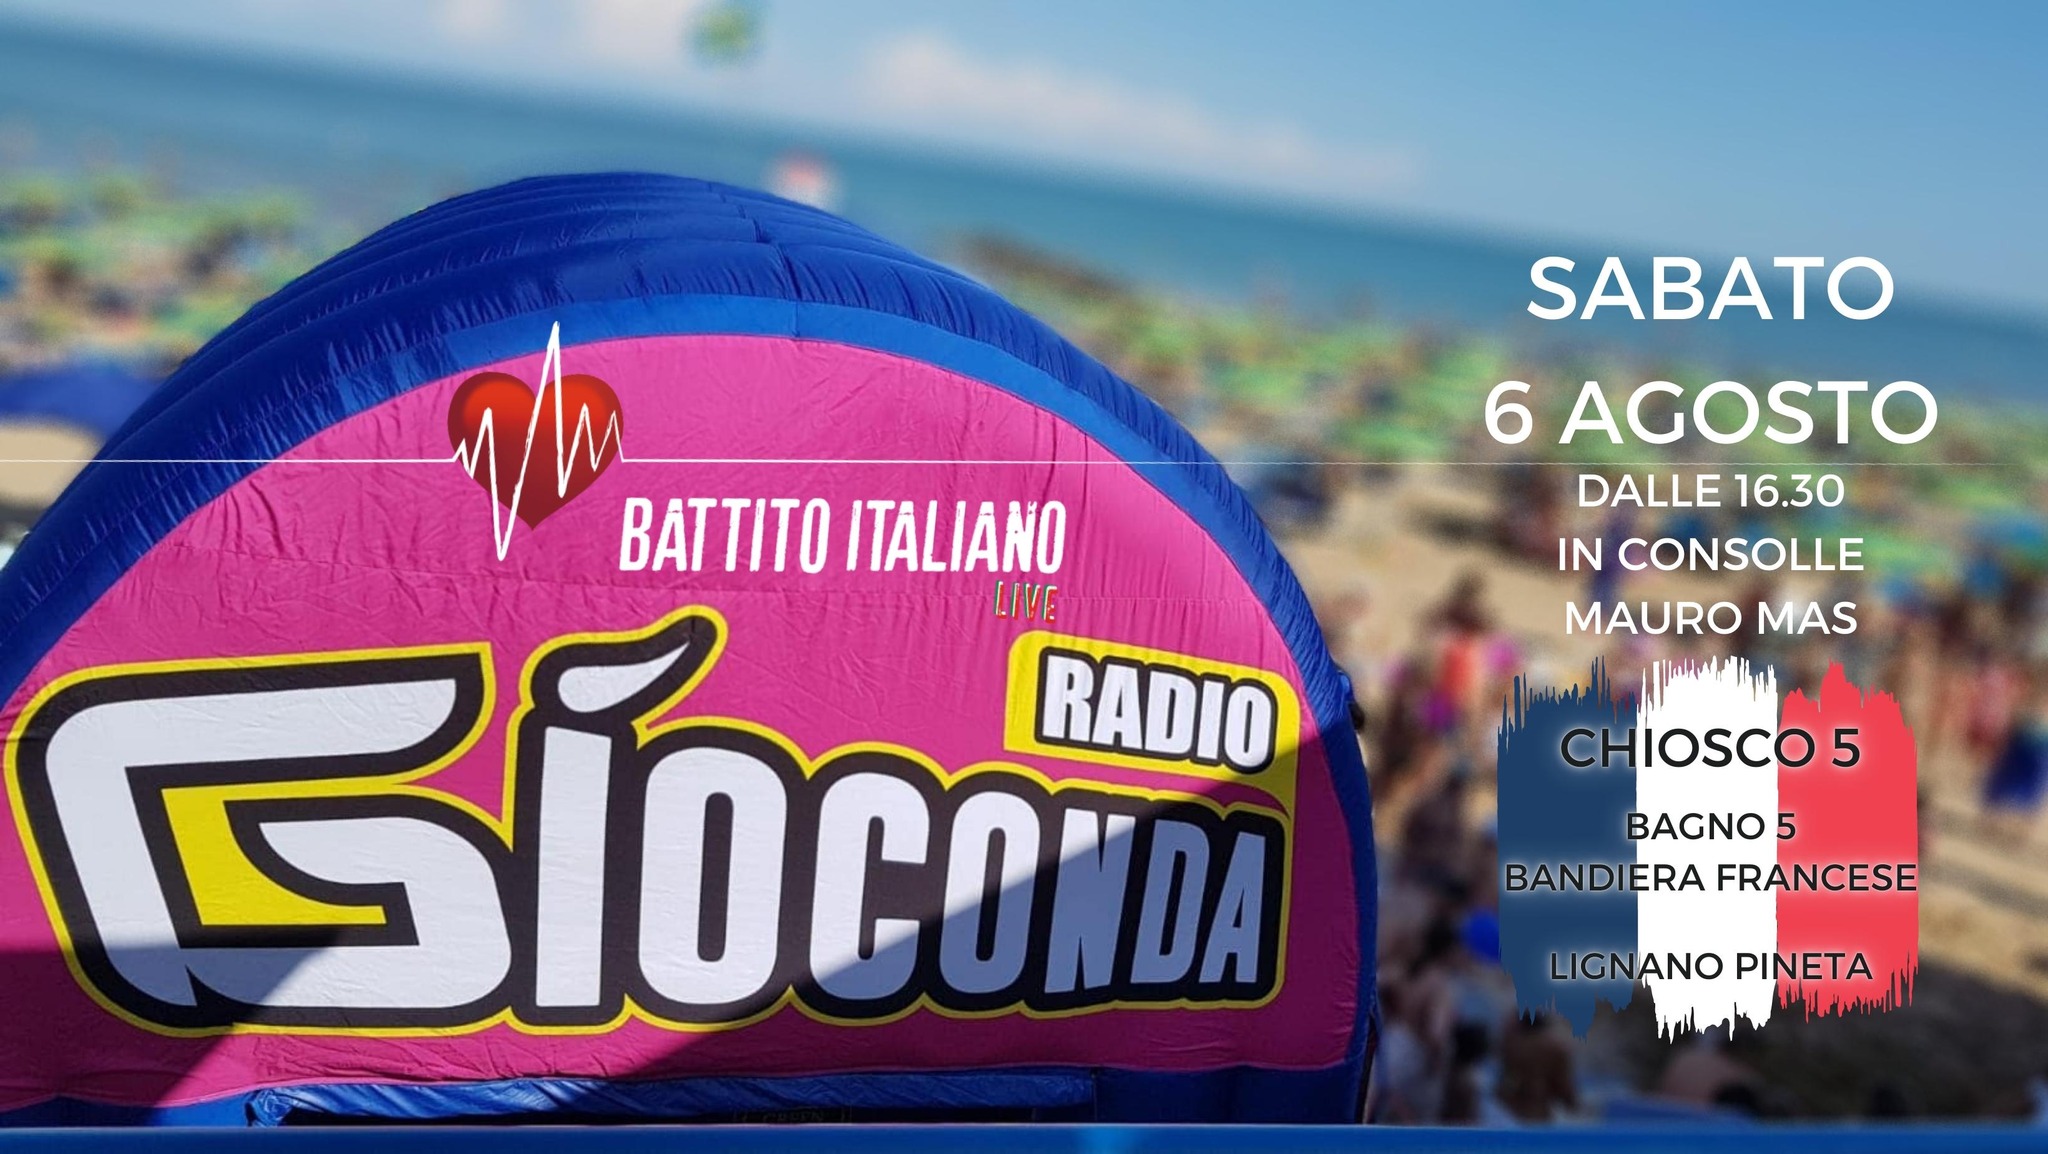 Battito Italiano Live, Chiosco 5, Lignano Pineta, radio gioconda